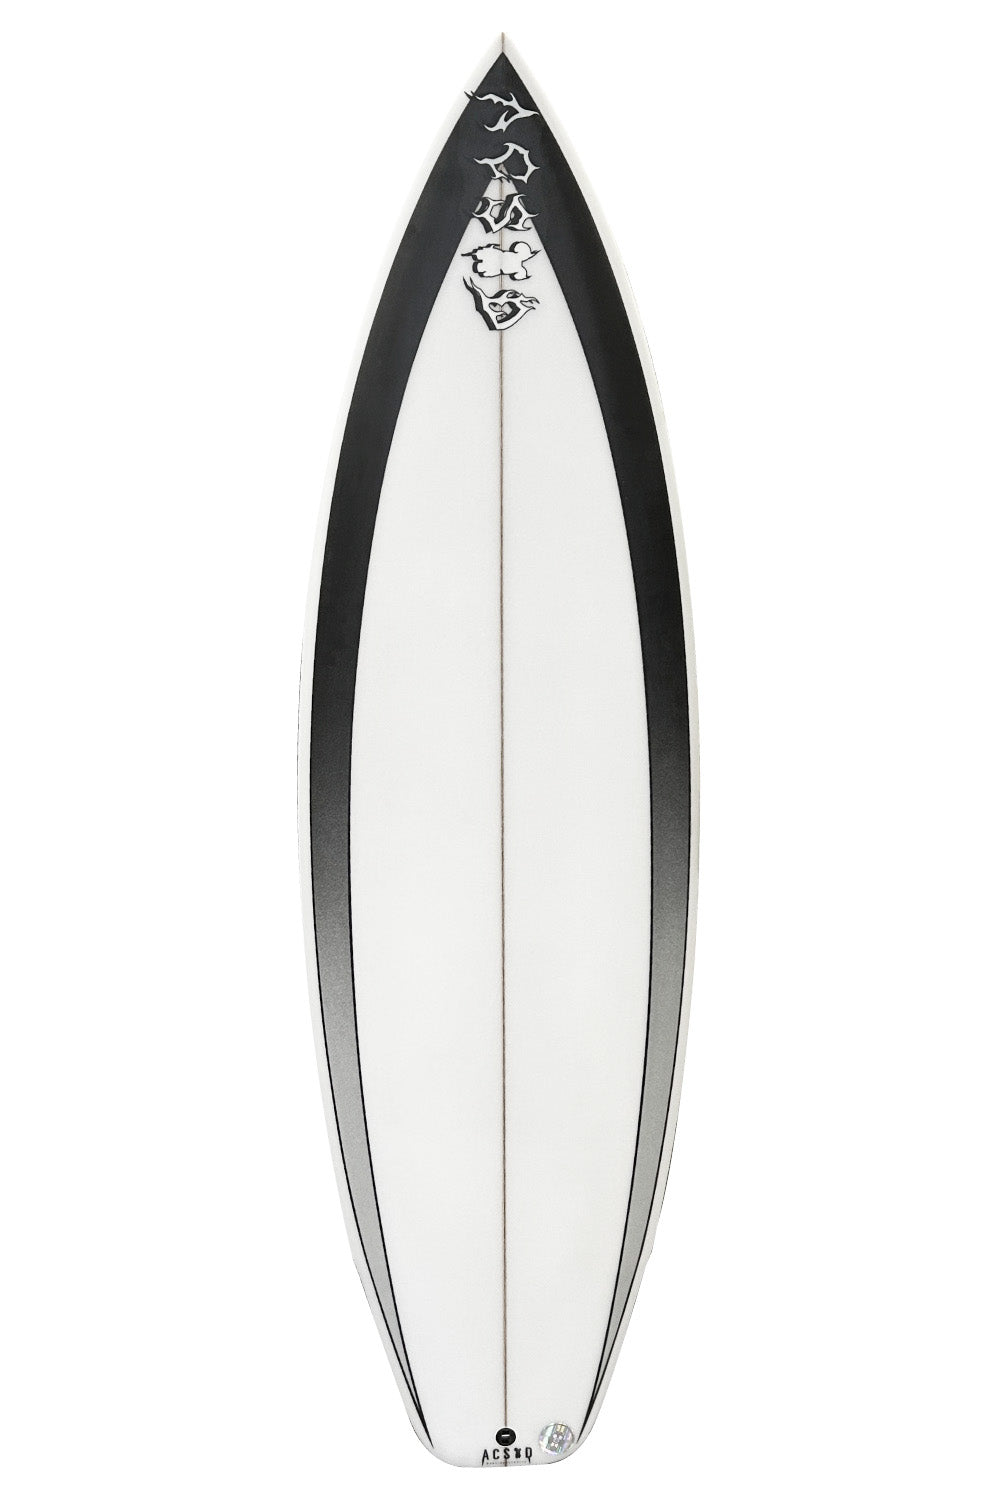 ACSOD Lotus Surfboard